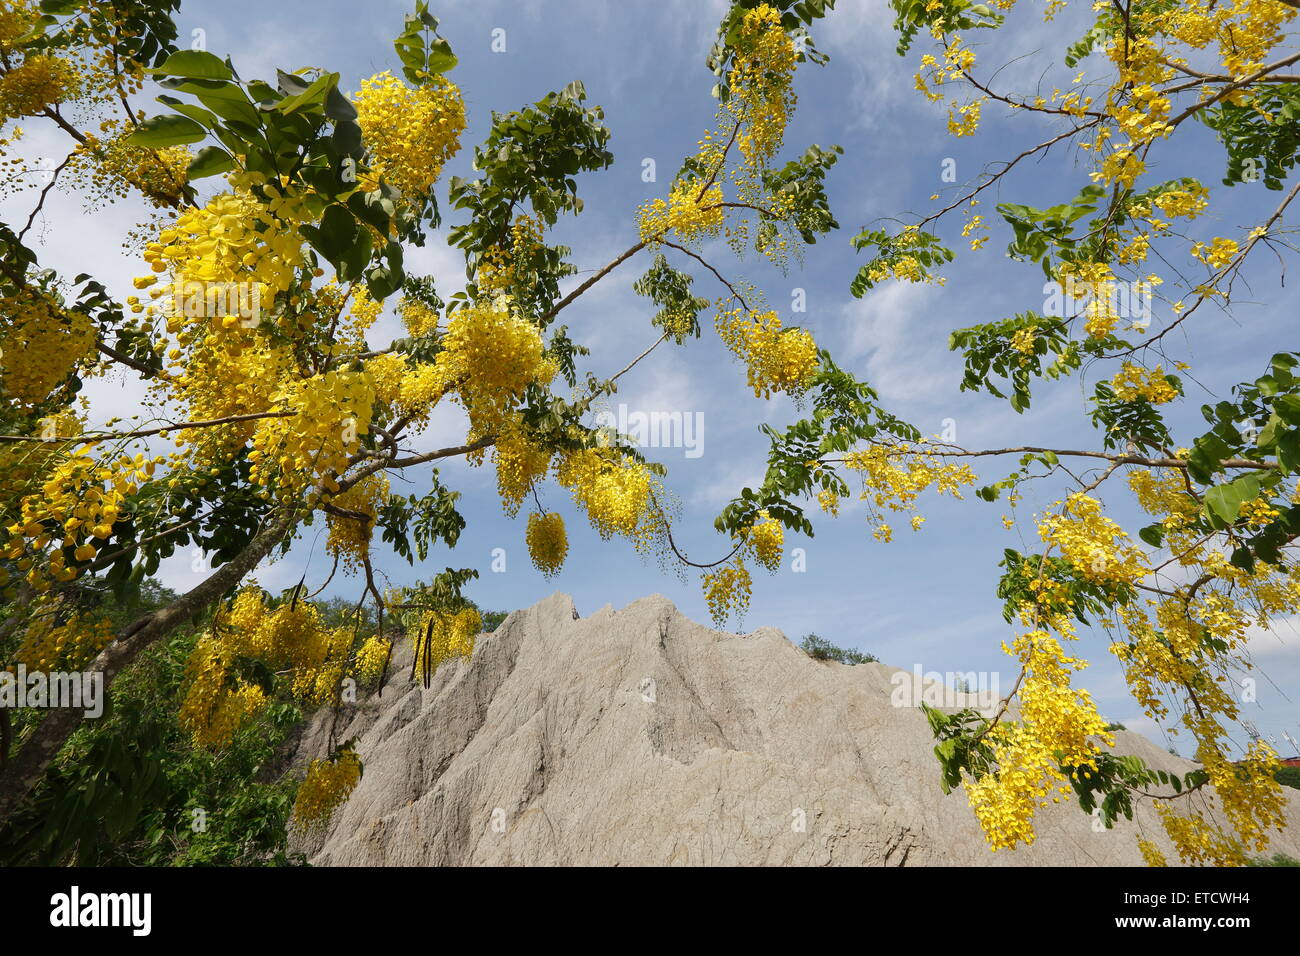 Flowers of Golden Shower Tree Stock Photo